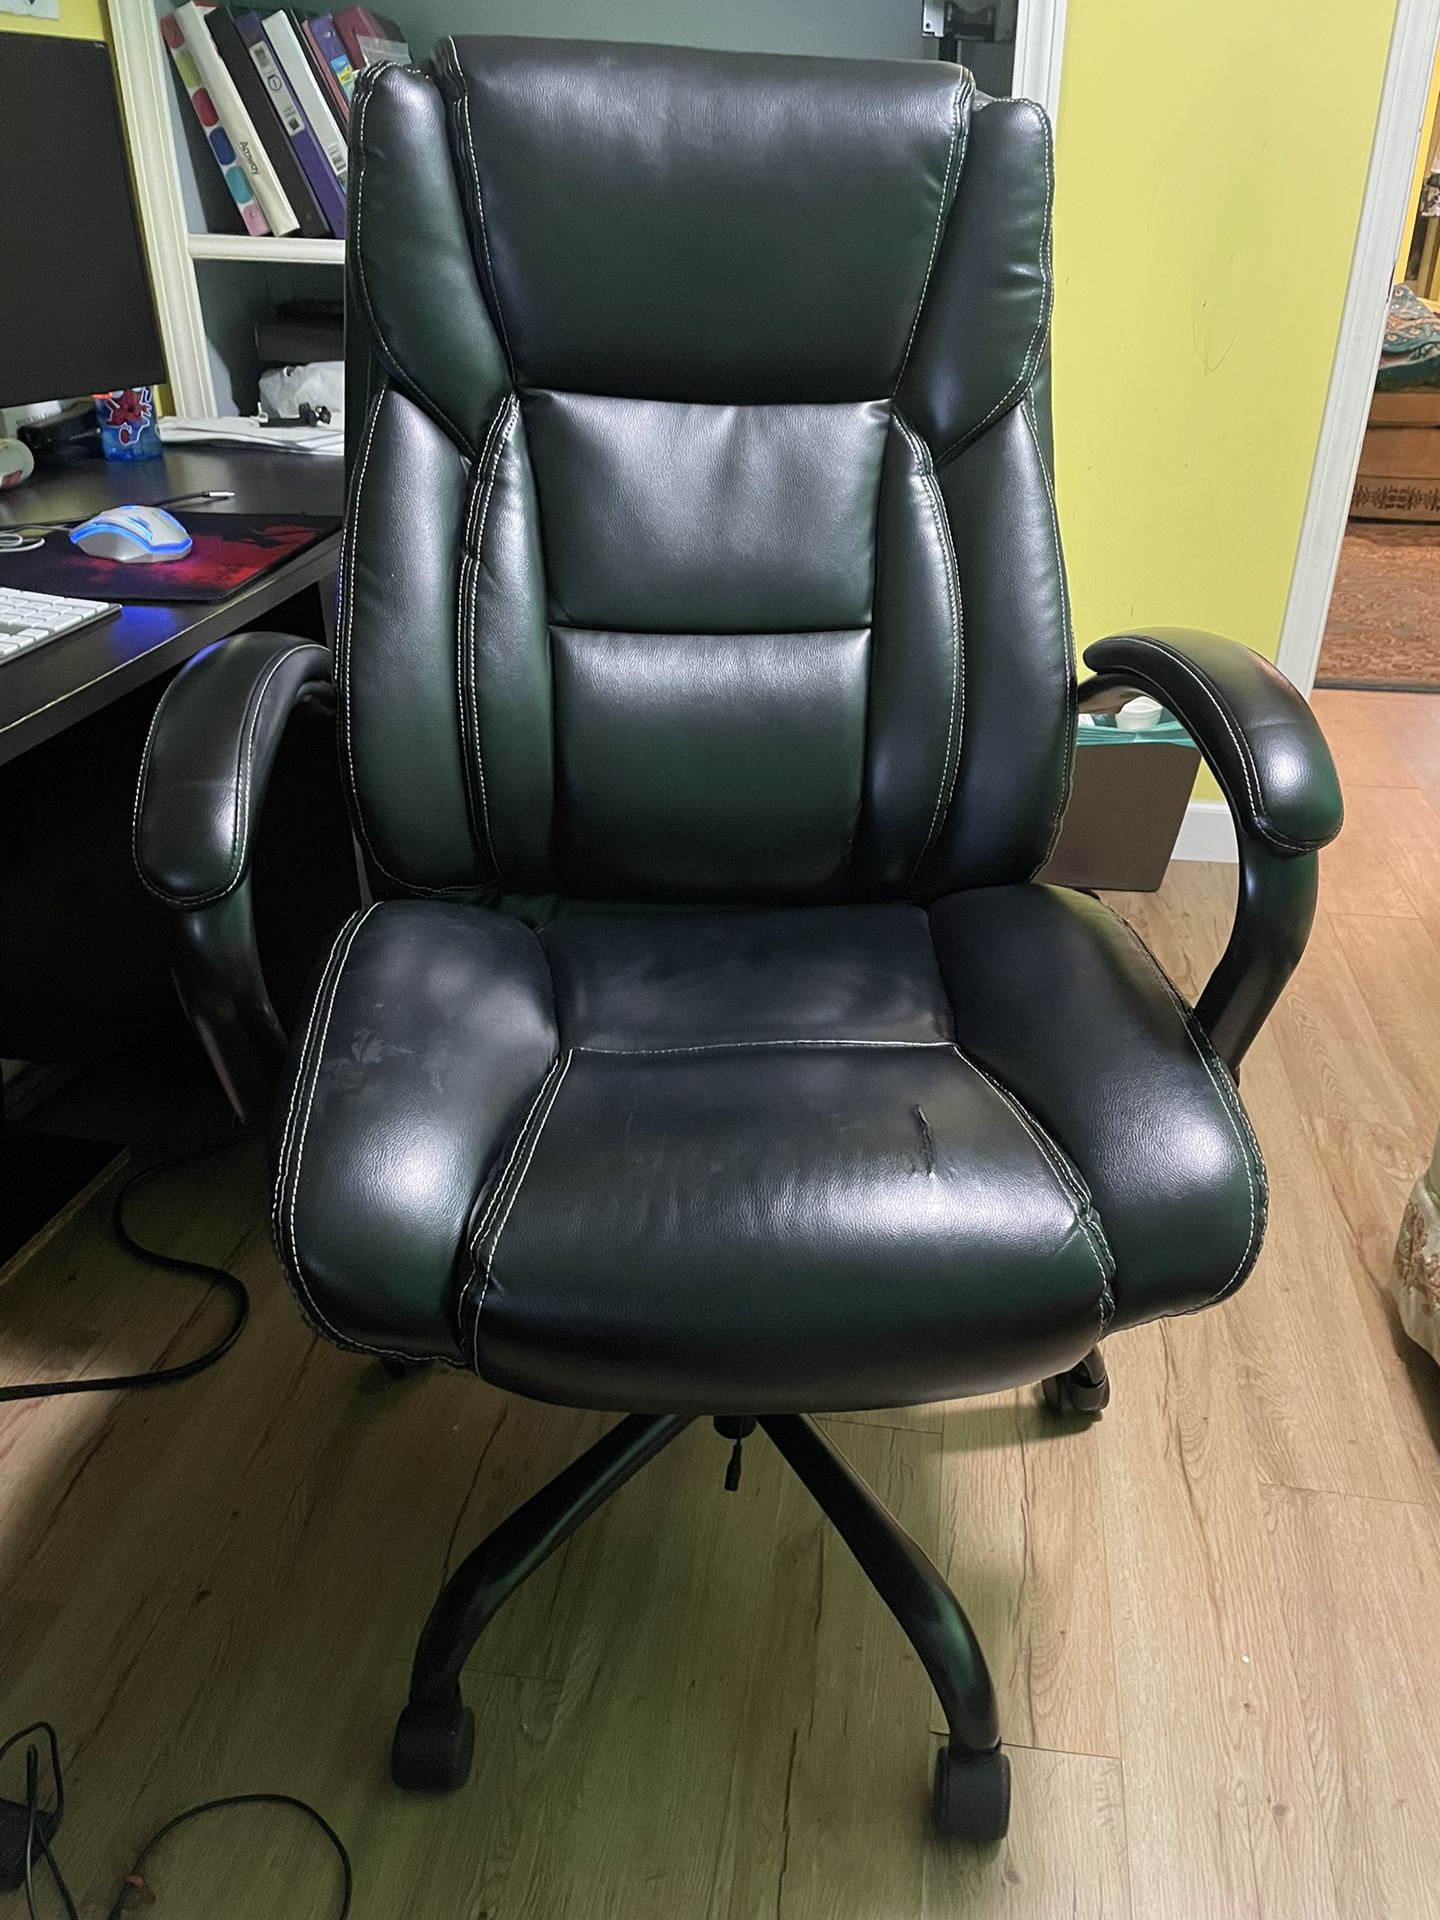 Official Desk Chair